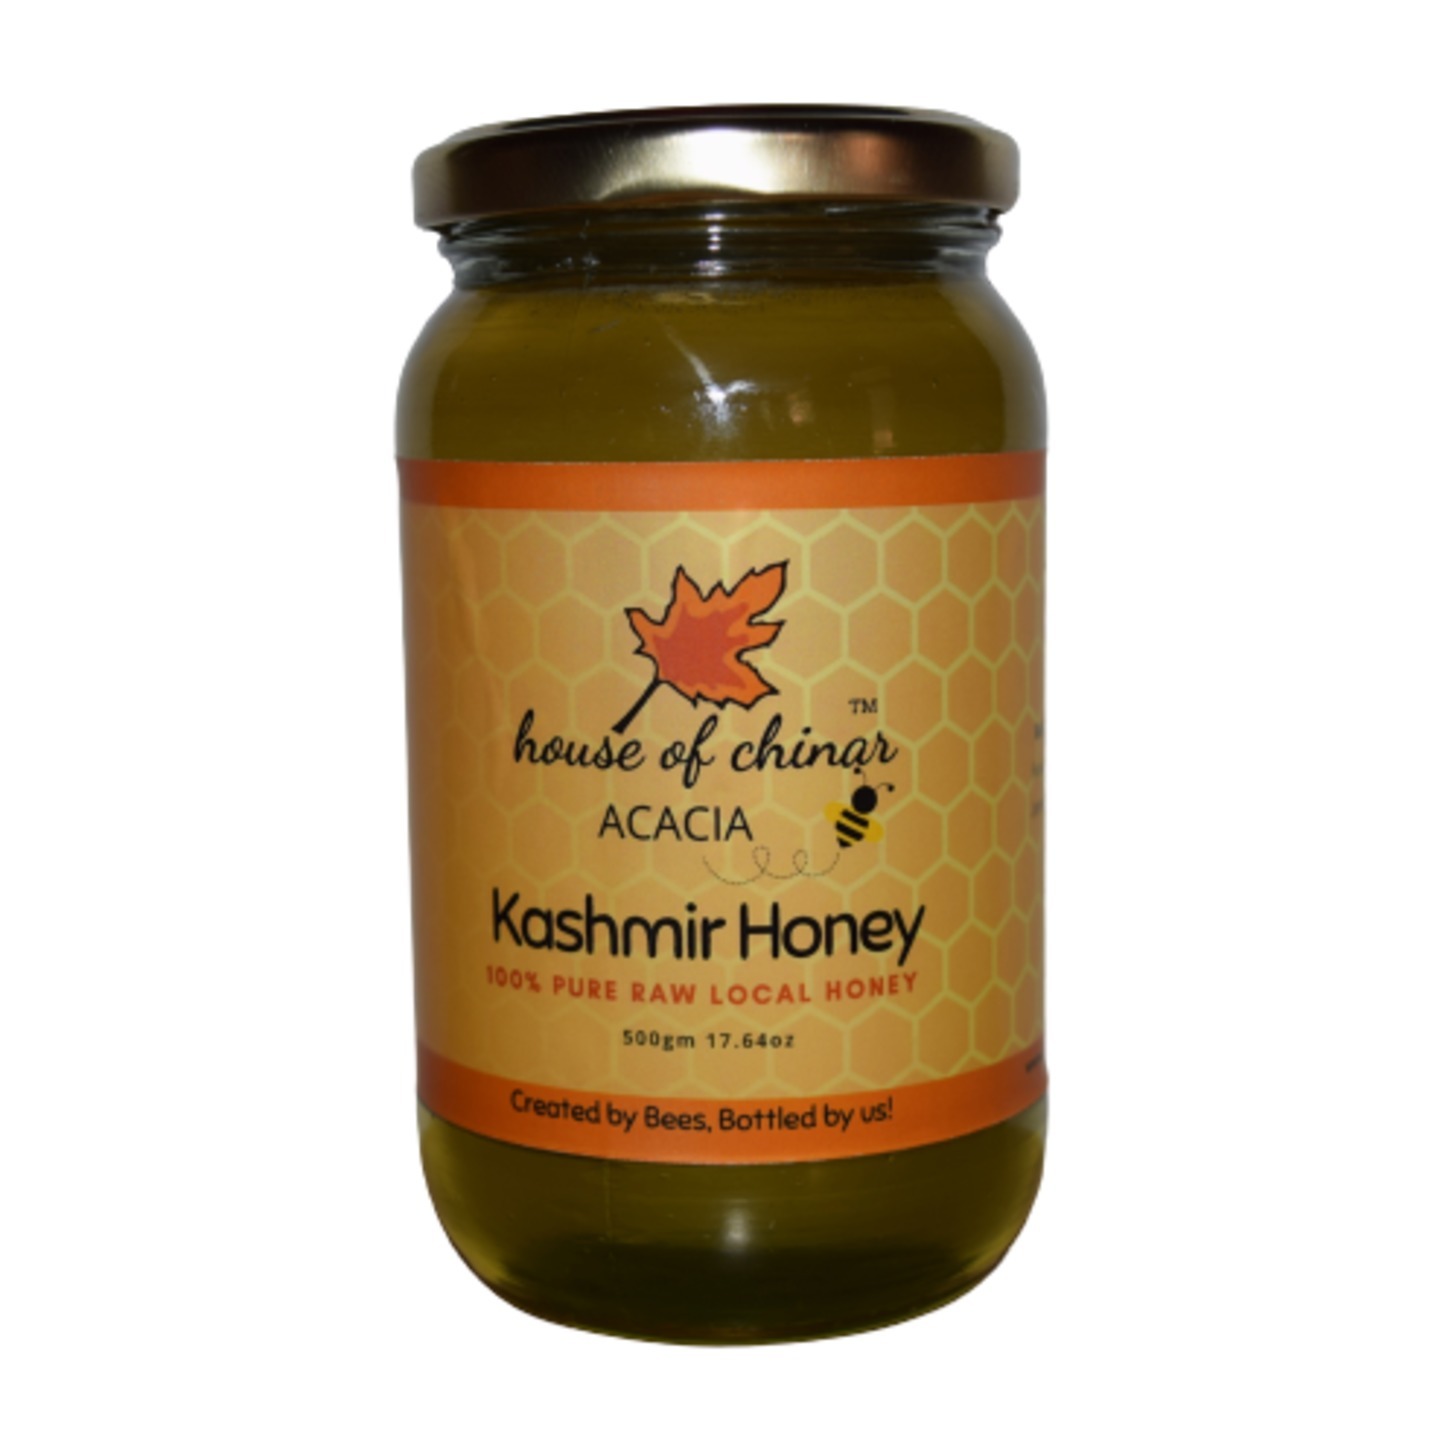 Kashmir Honey ACACIA 500g